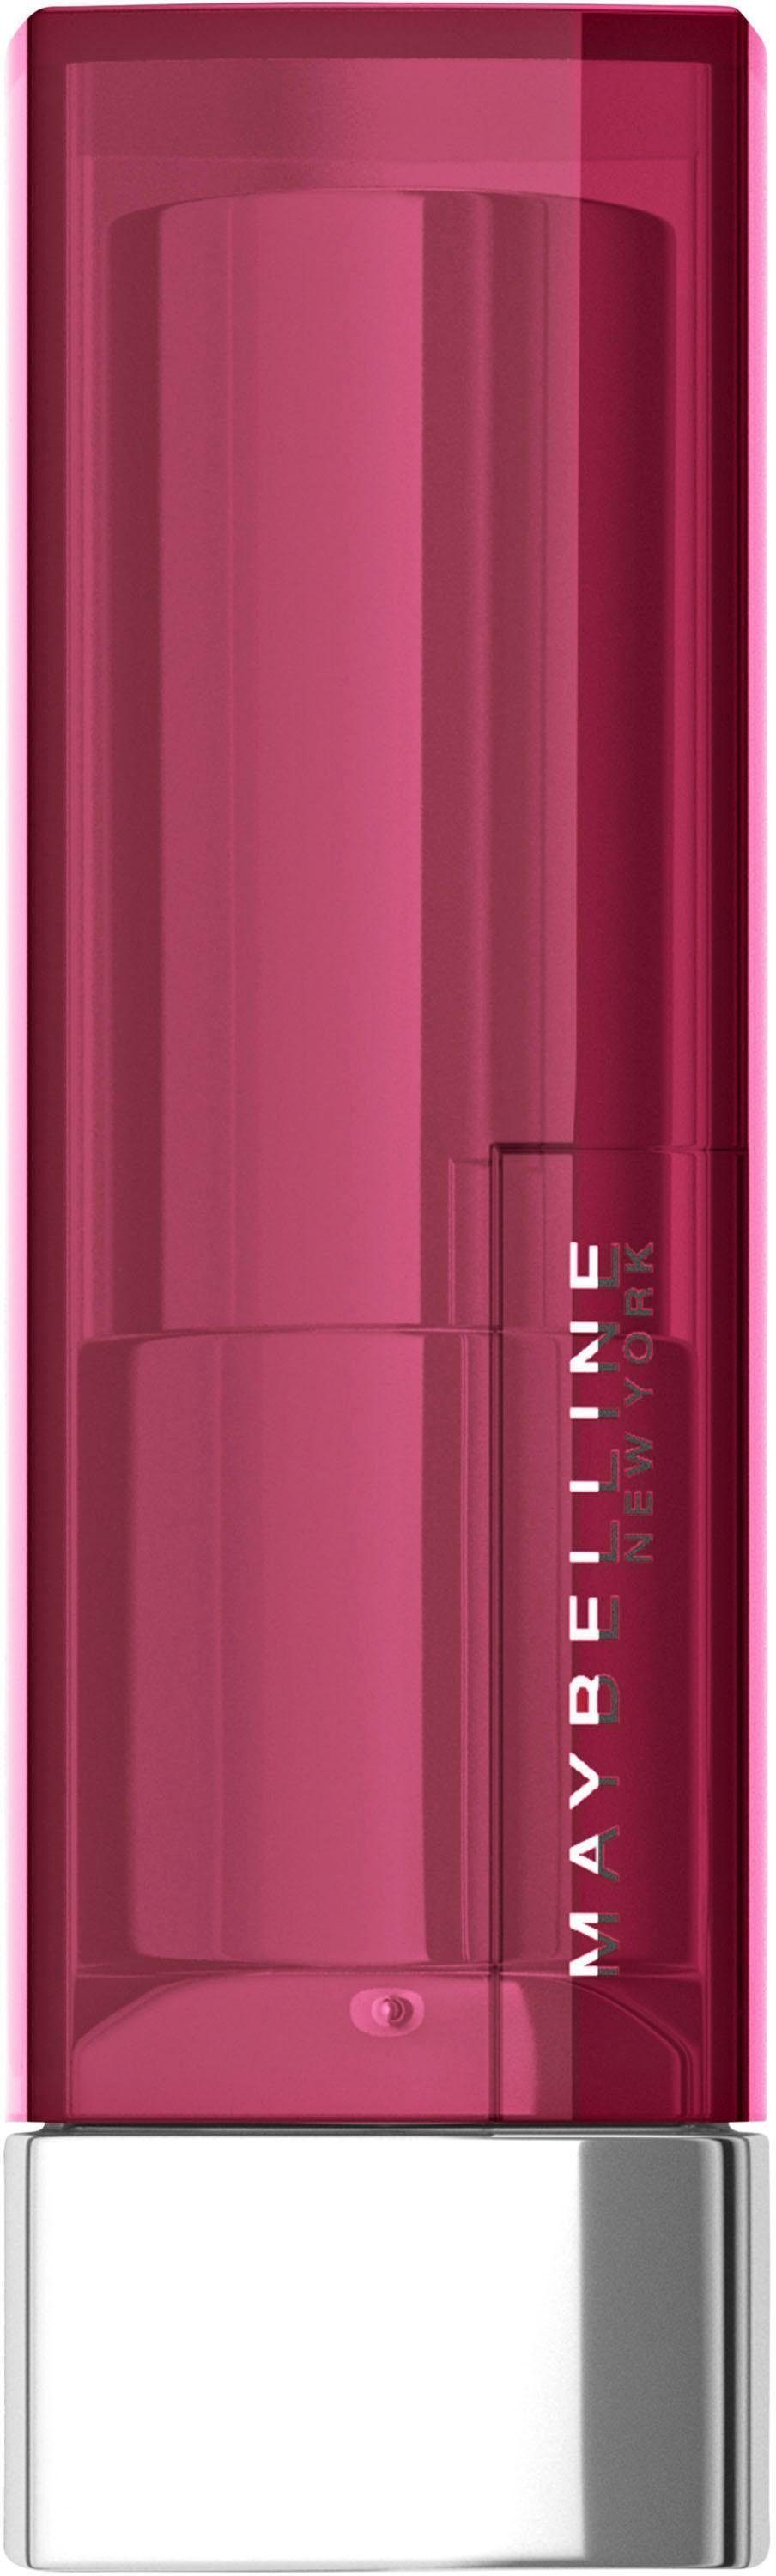 233 Lippenstift Pink NEW Pose Creams Sensational Color YORK MAYBELLINE the